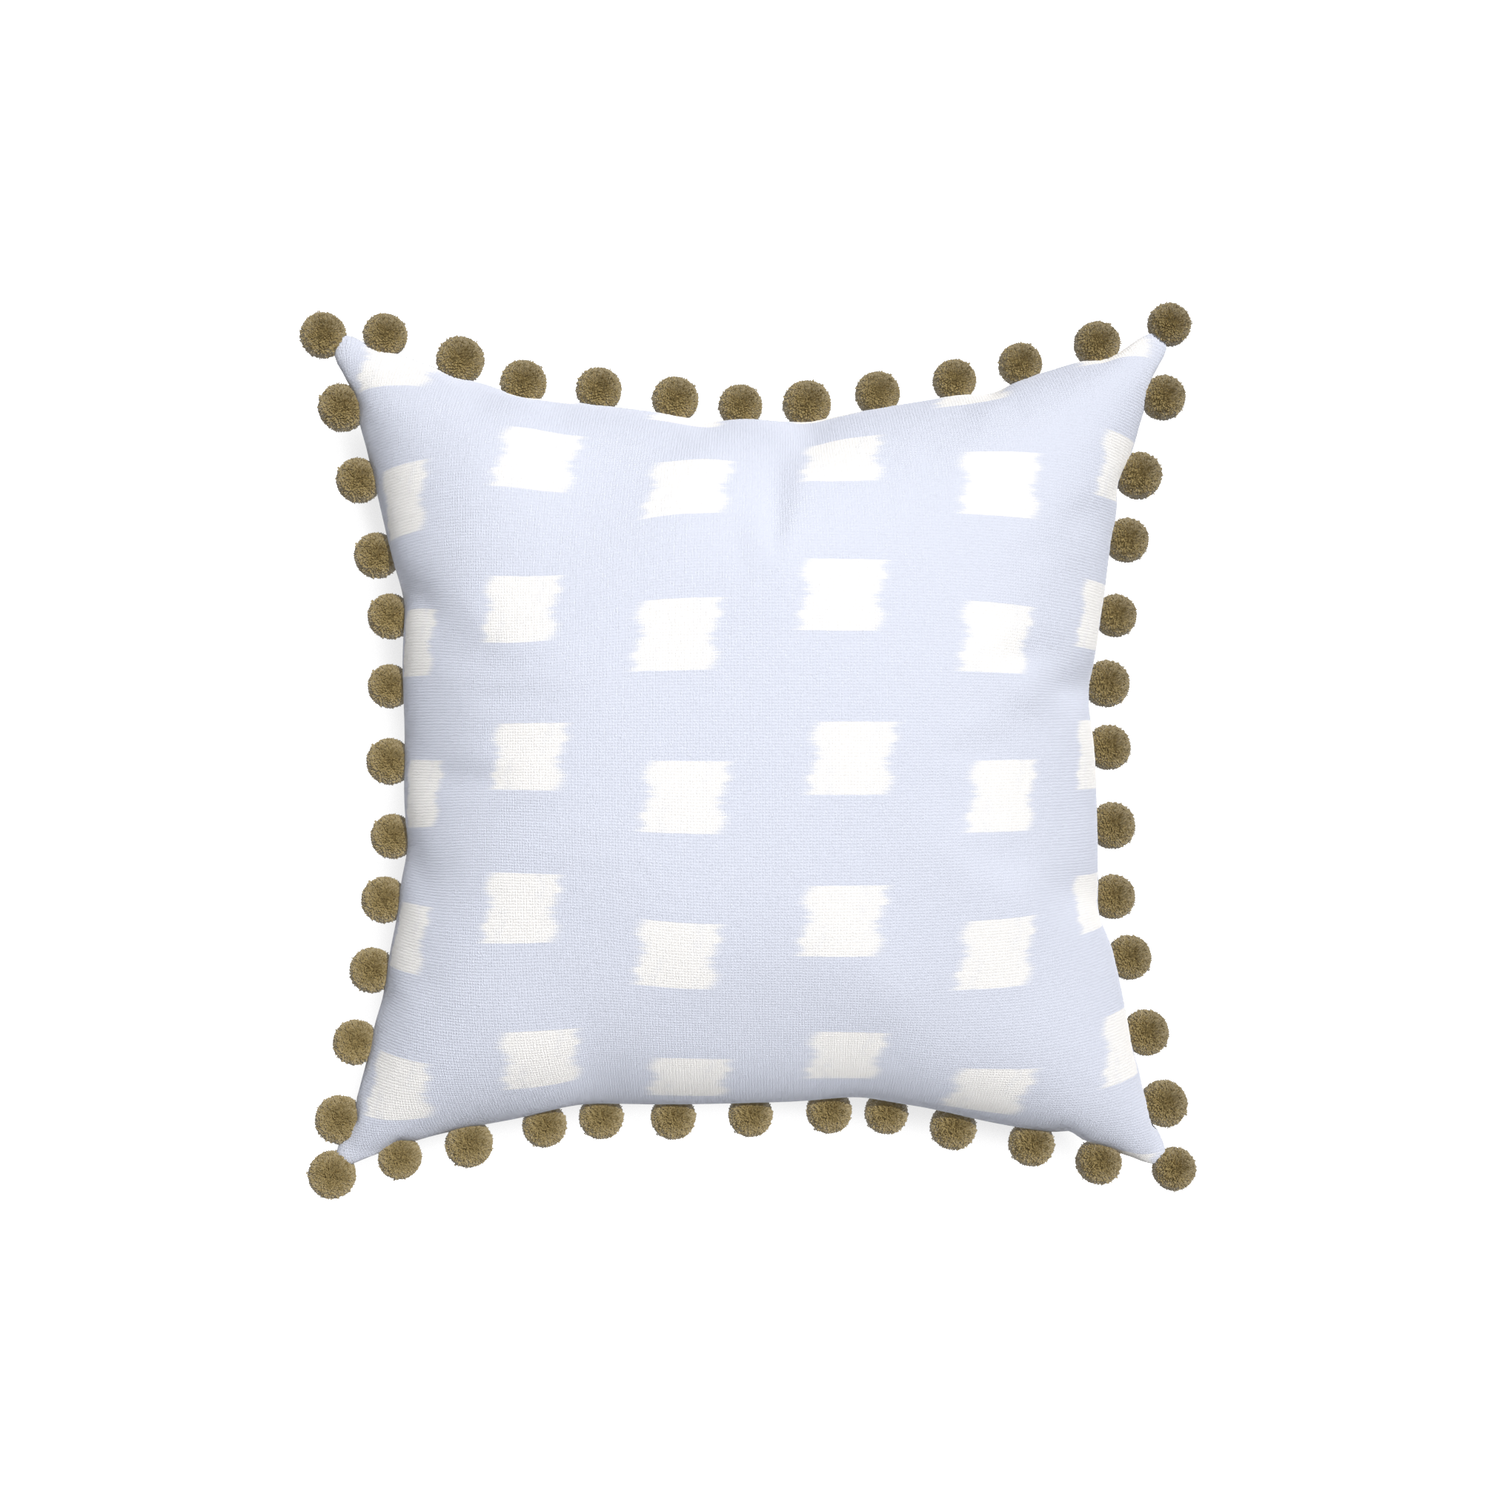 18-square denton custom sky blue patternpillow with olive pom pom on white background